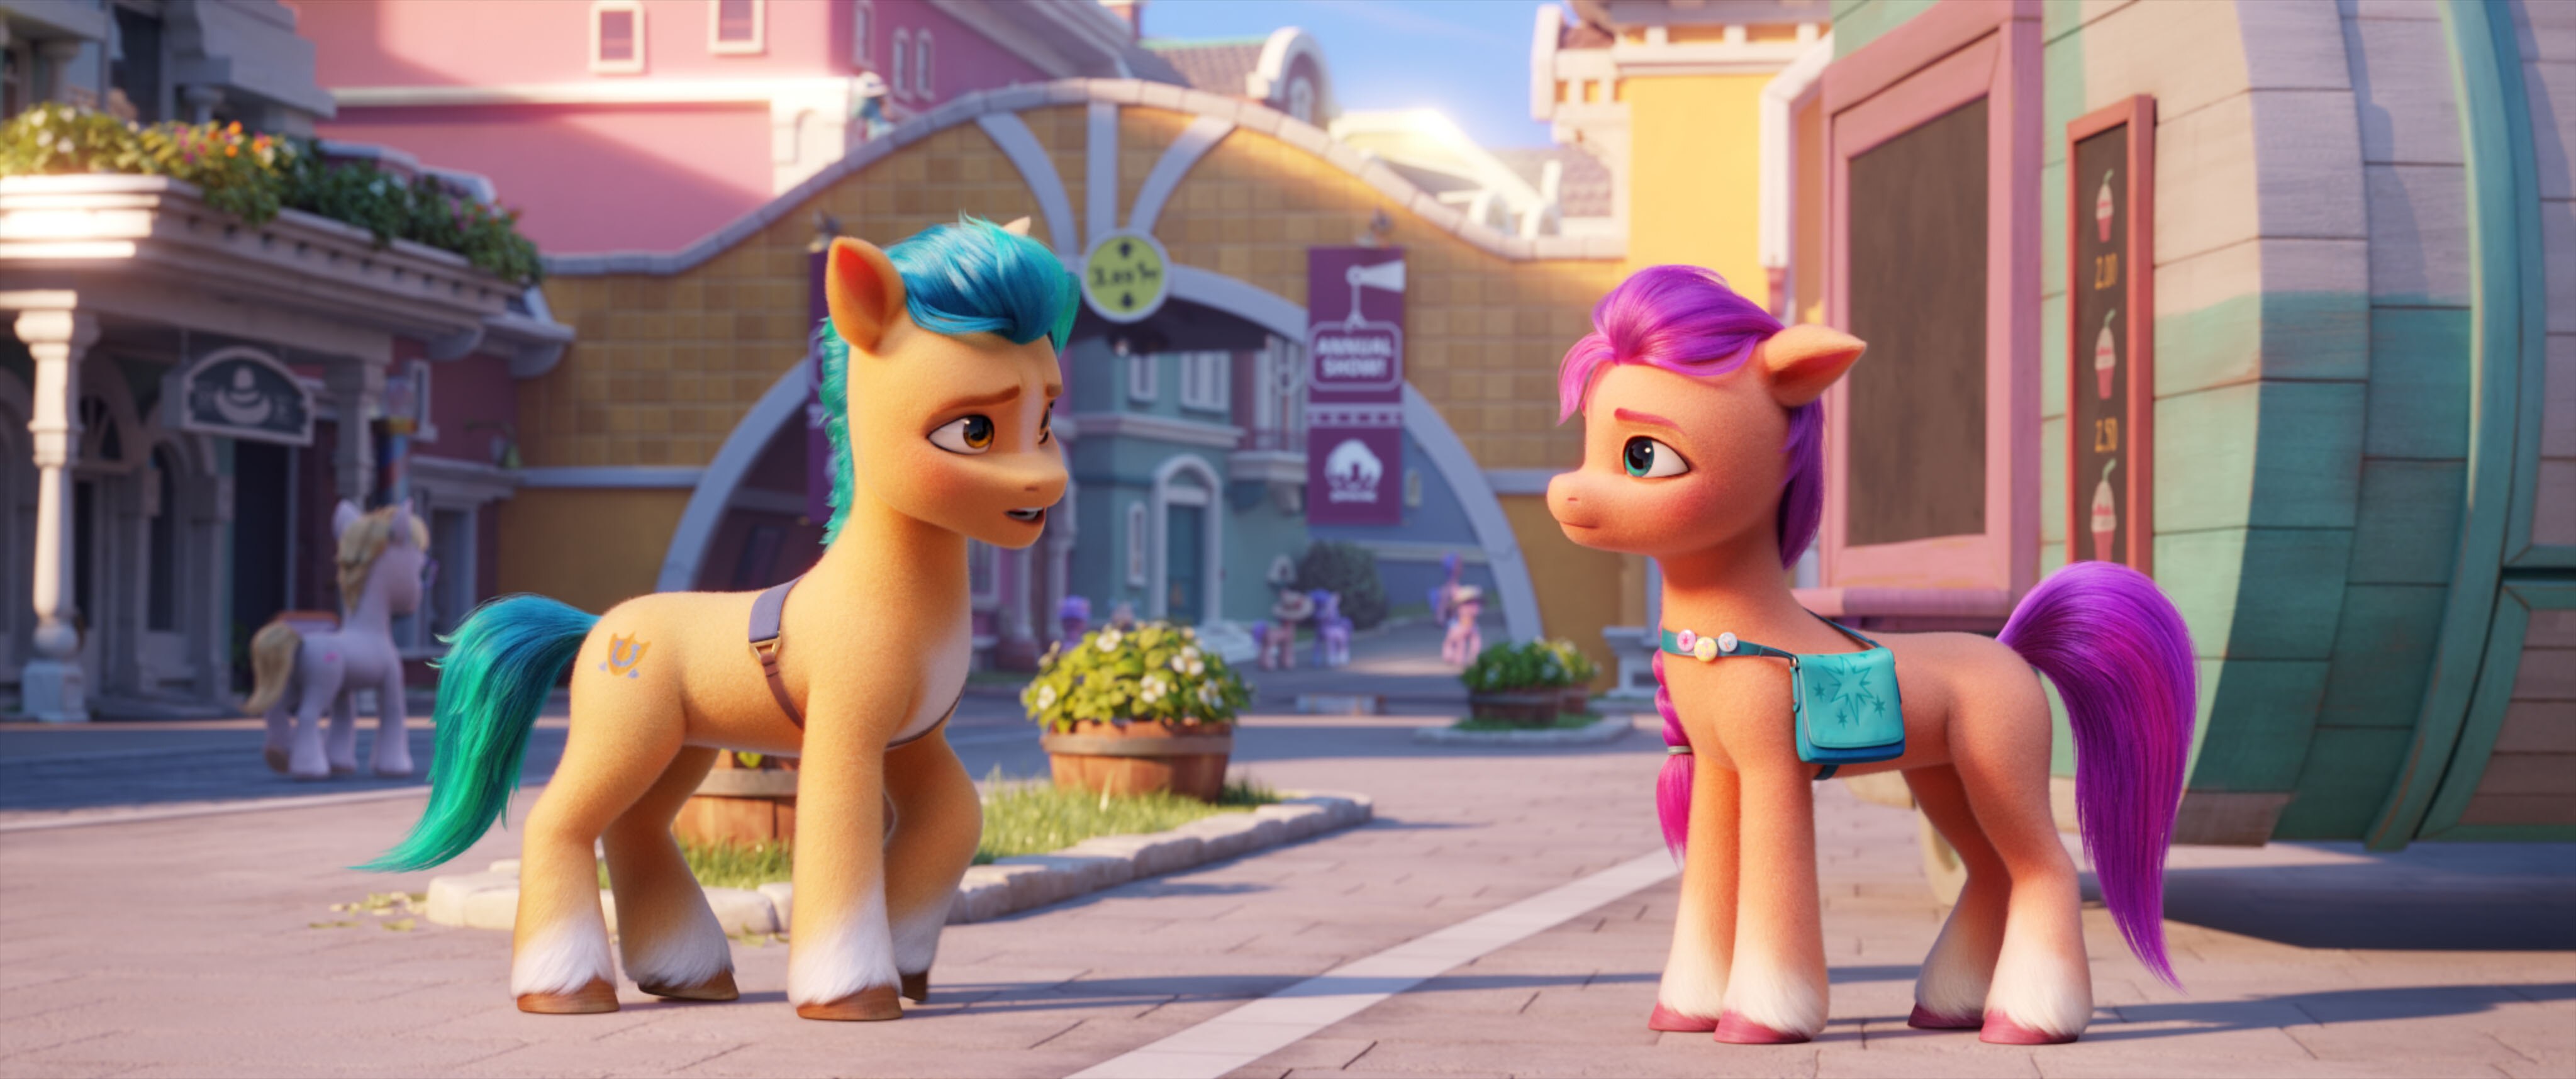 Figura - My Little Pony - A New Generation Grandes Amigos do Filme